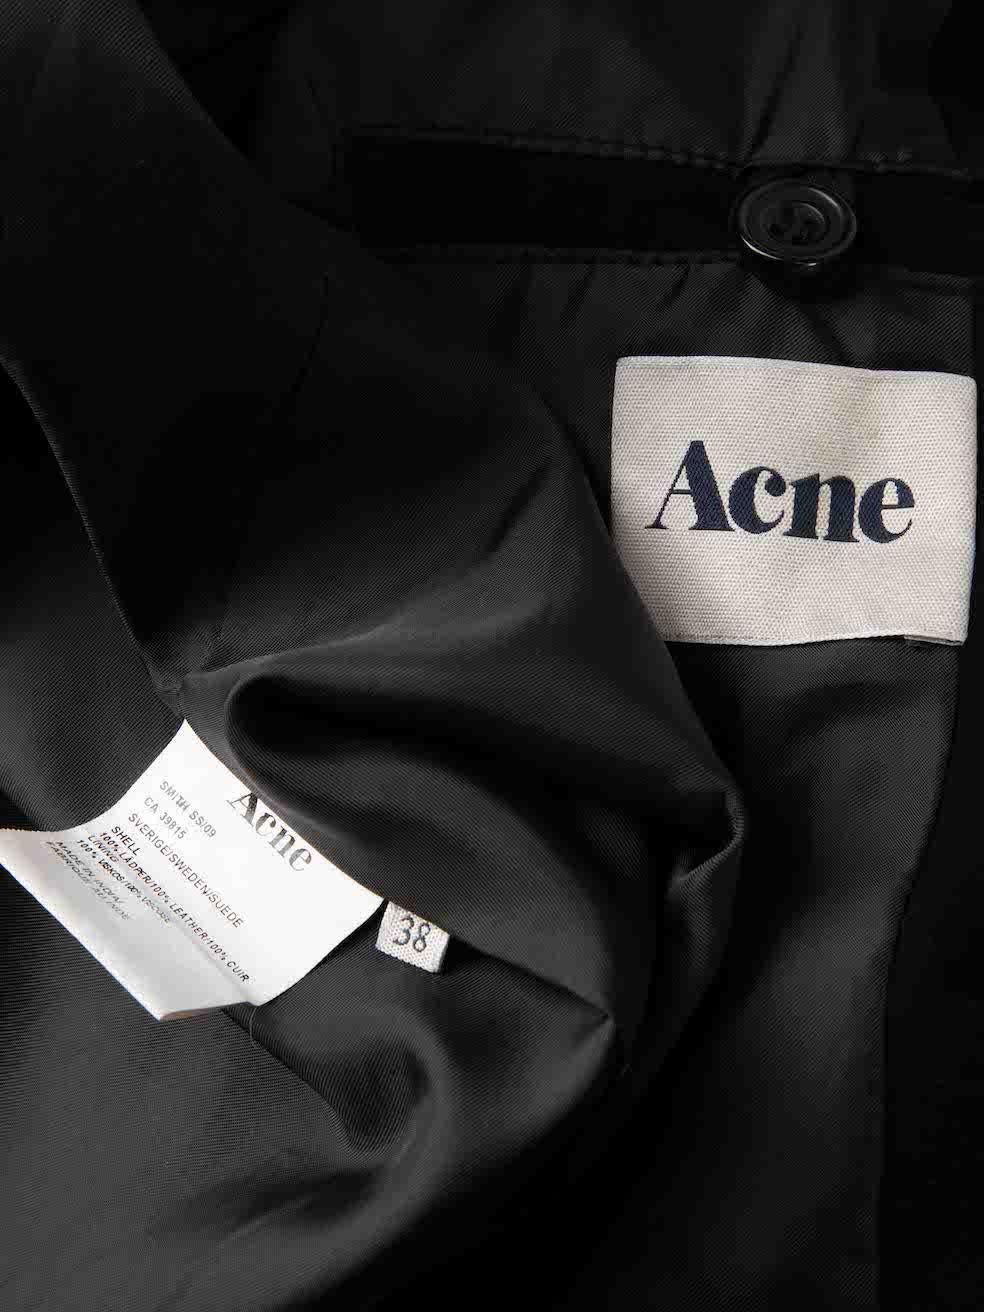 Acne Studios Black Suede Zip Up Biker Jacket Size M For Sale 3